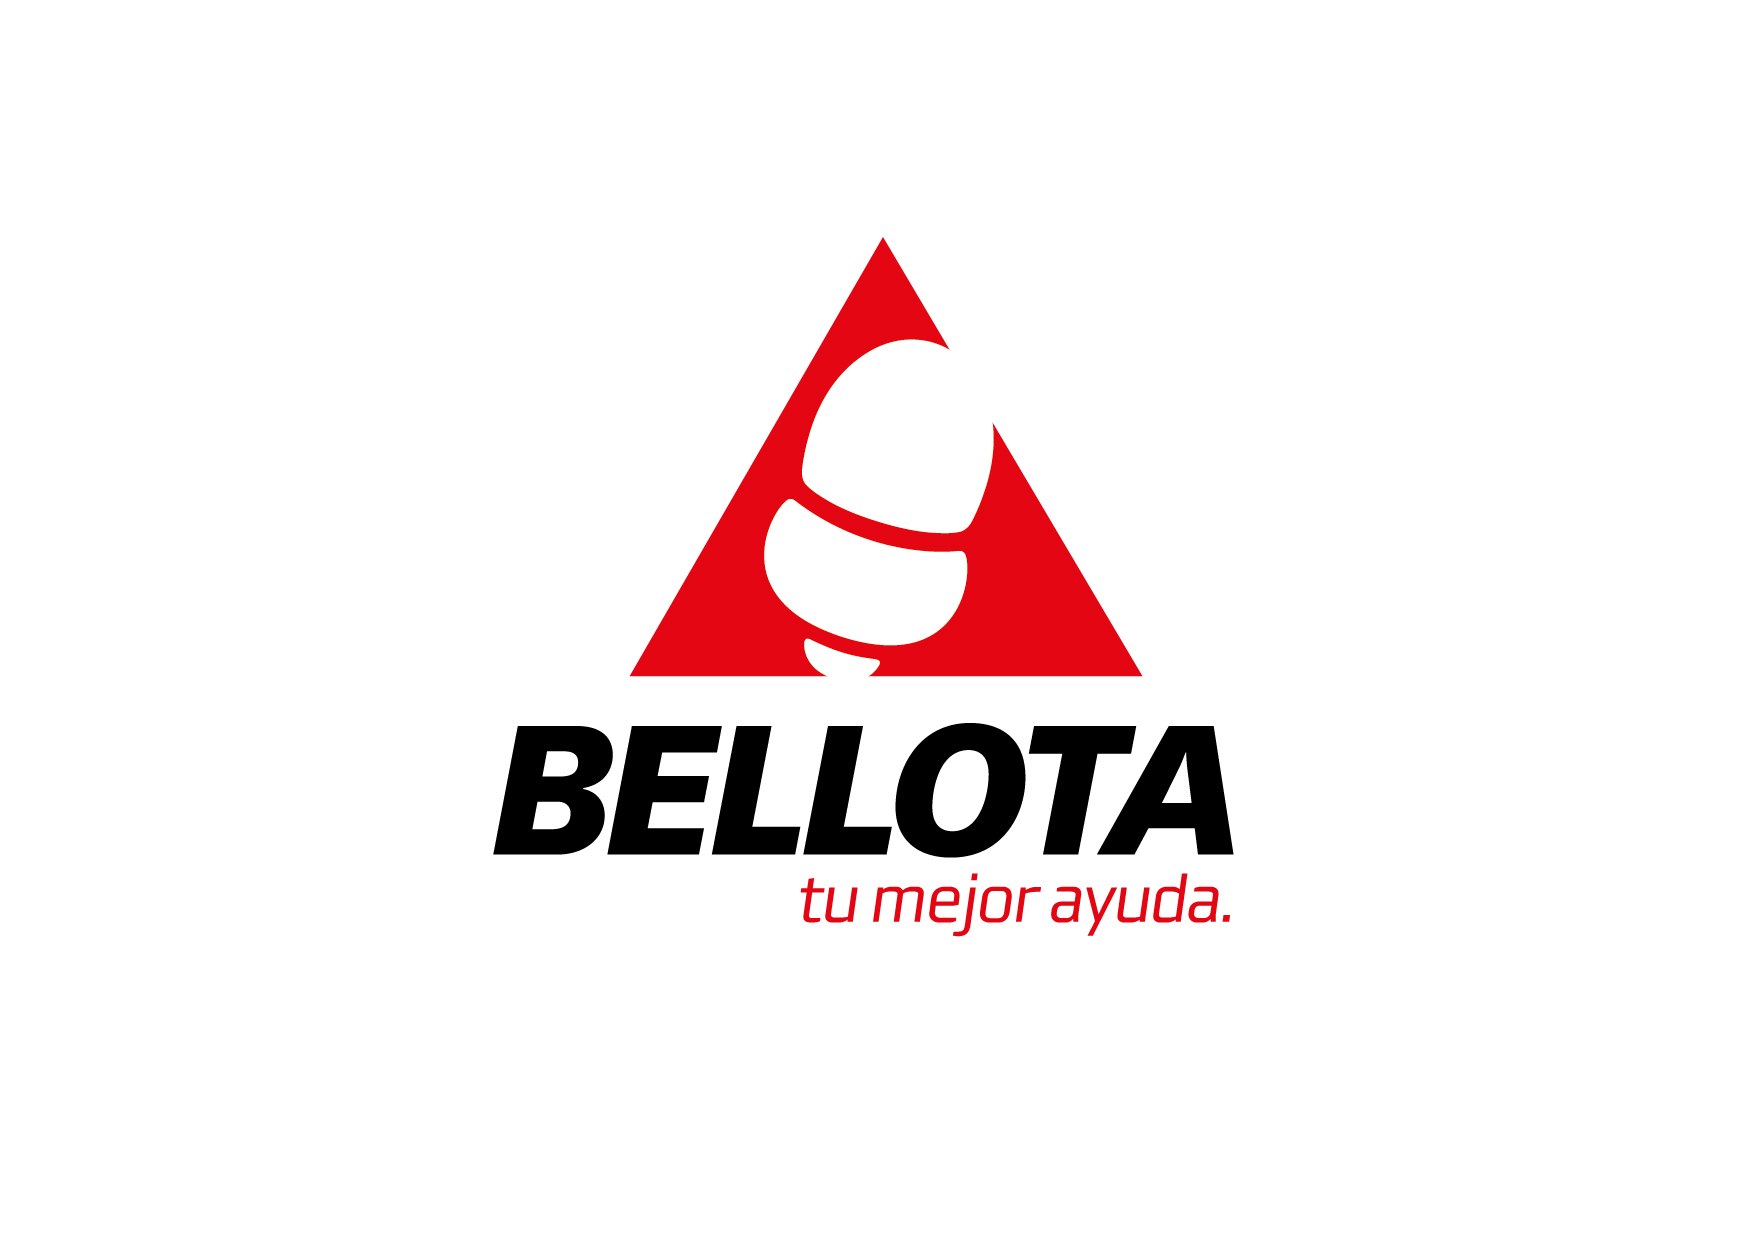 BELLOTA